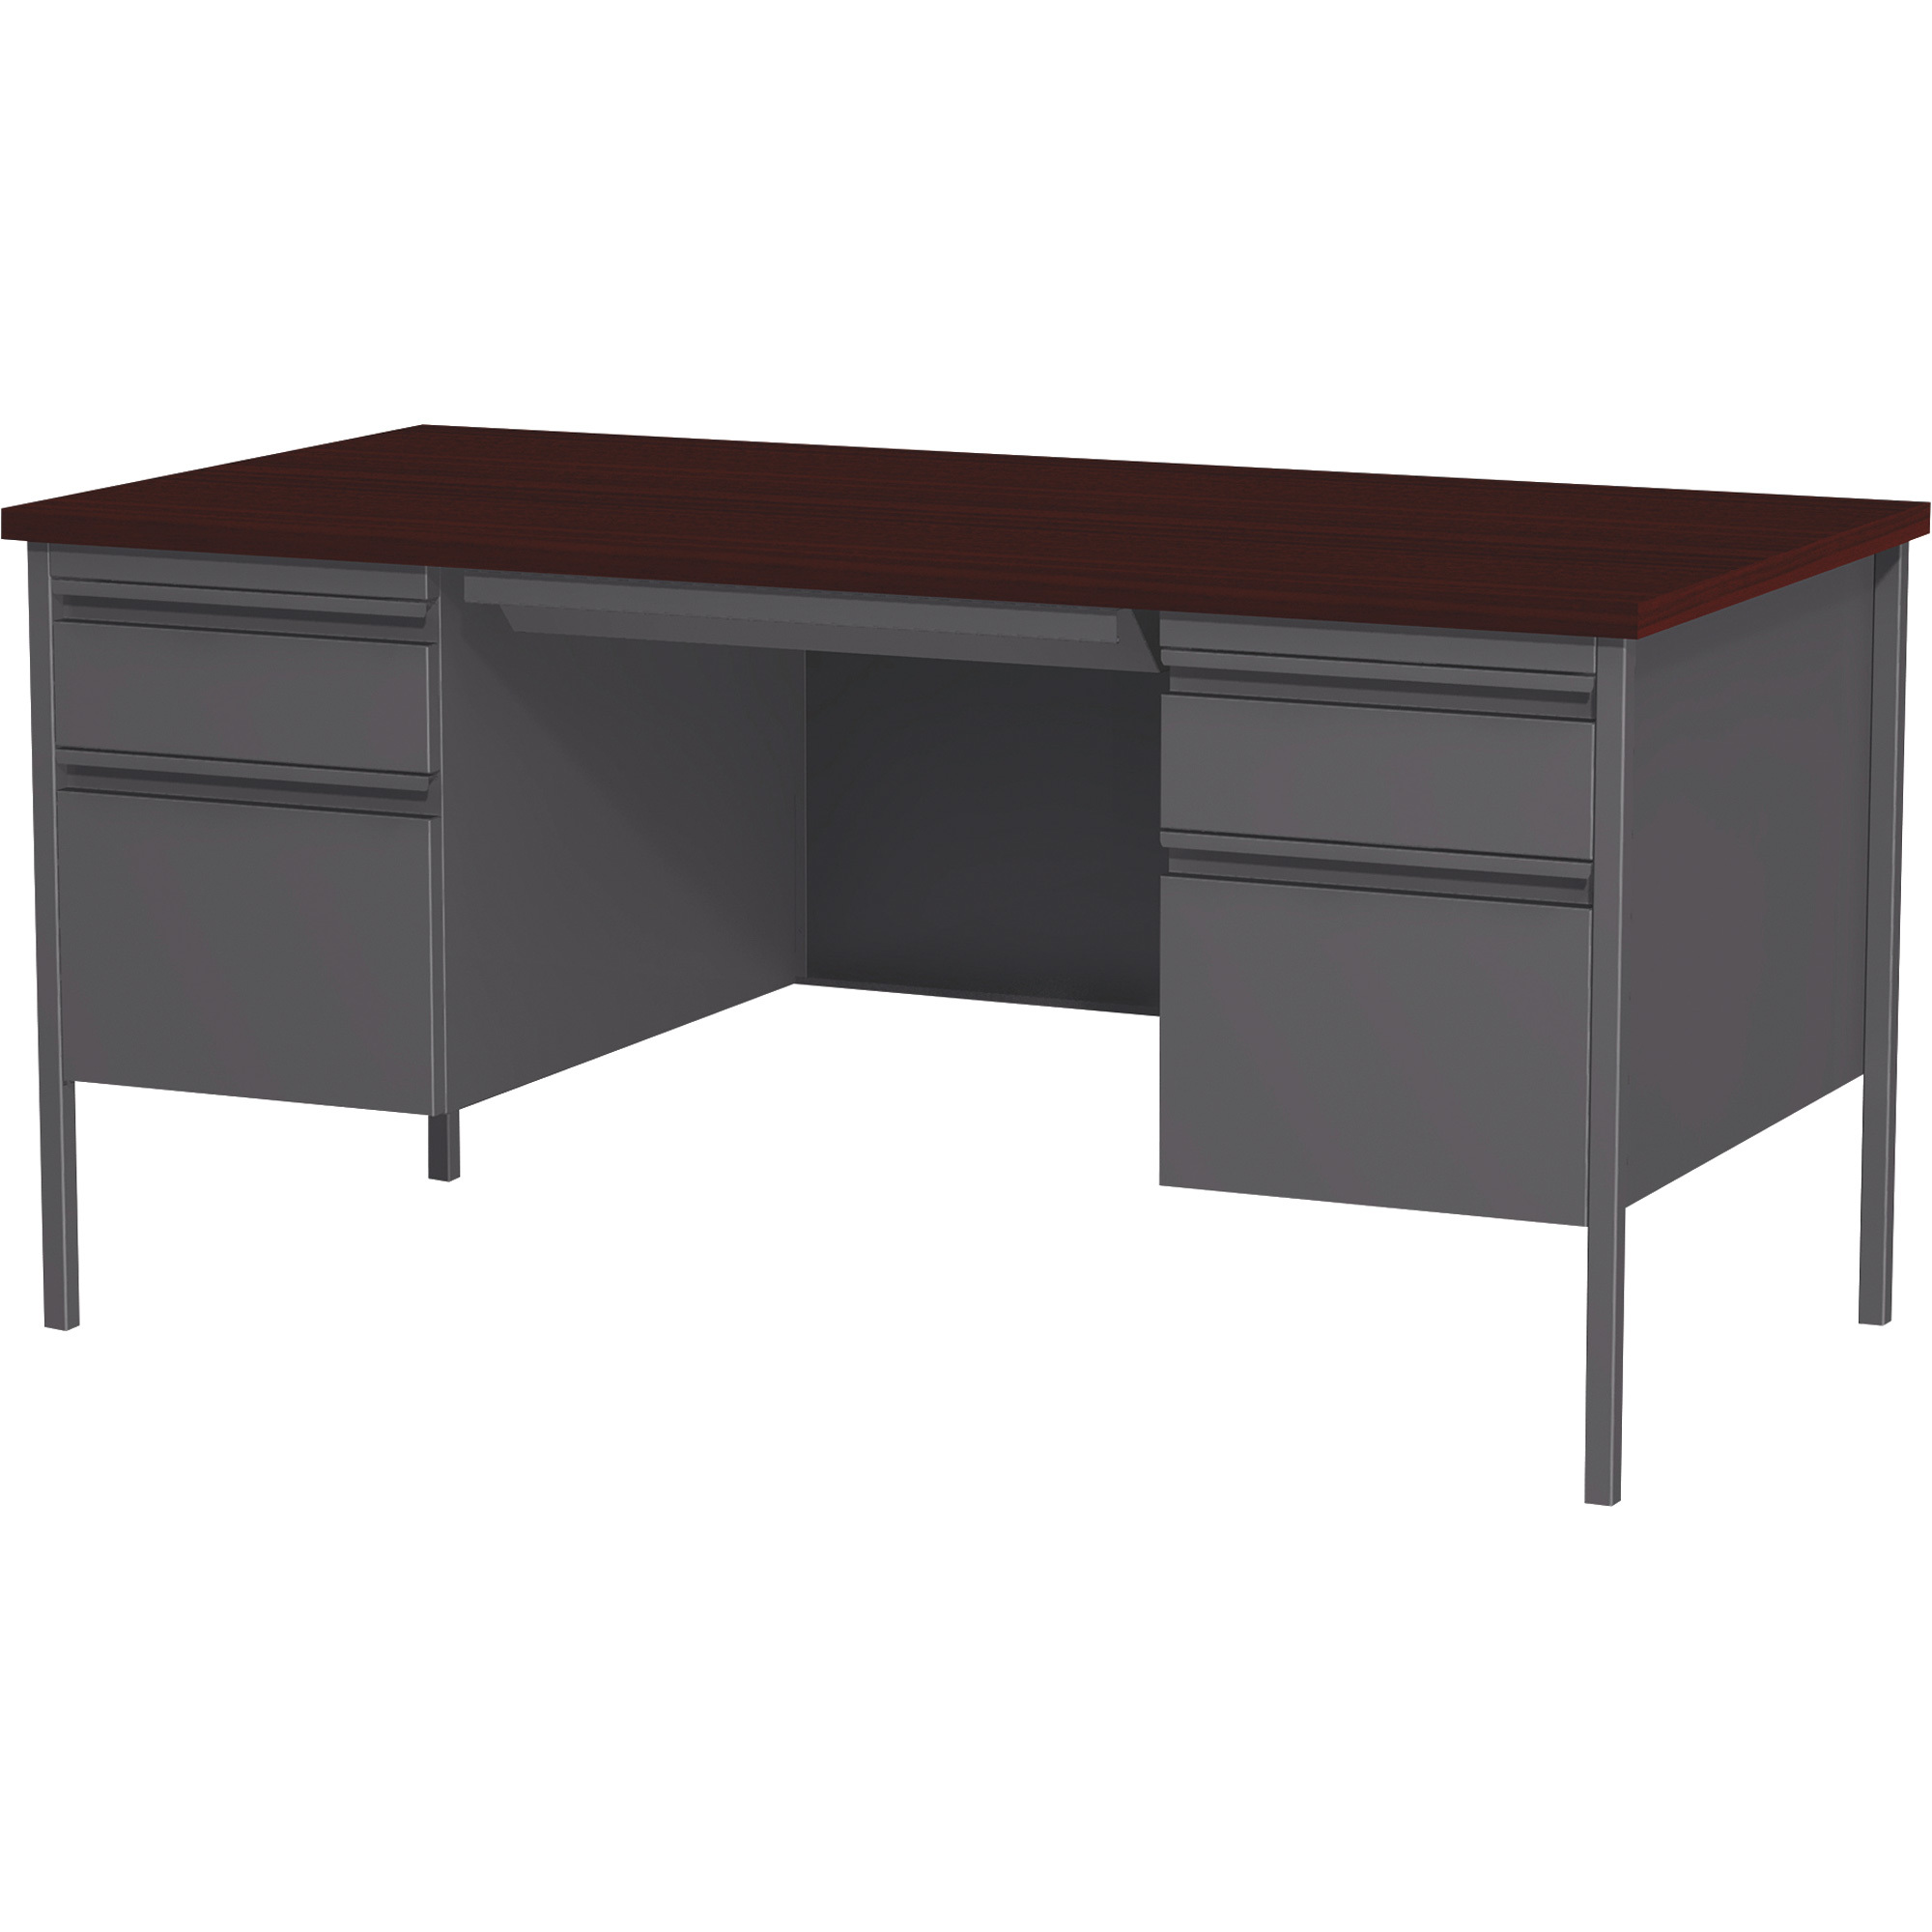 Traditional Pedestal Desk — Charcoal/Mahogany, 66Inch W x 30Inch D x 29 1/2Inch H, Model - Hirsh Industries 20102